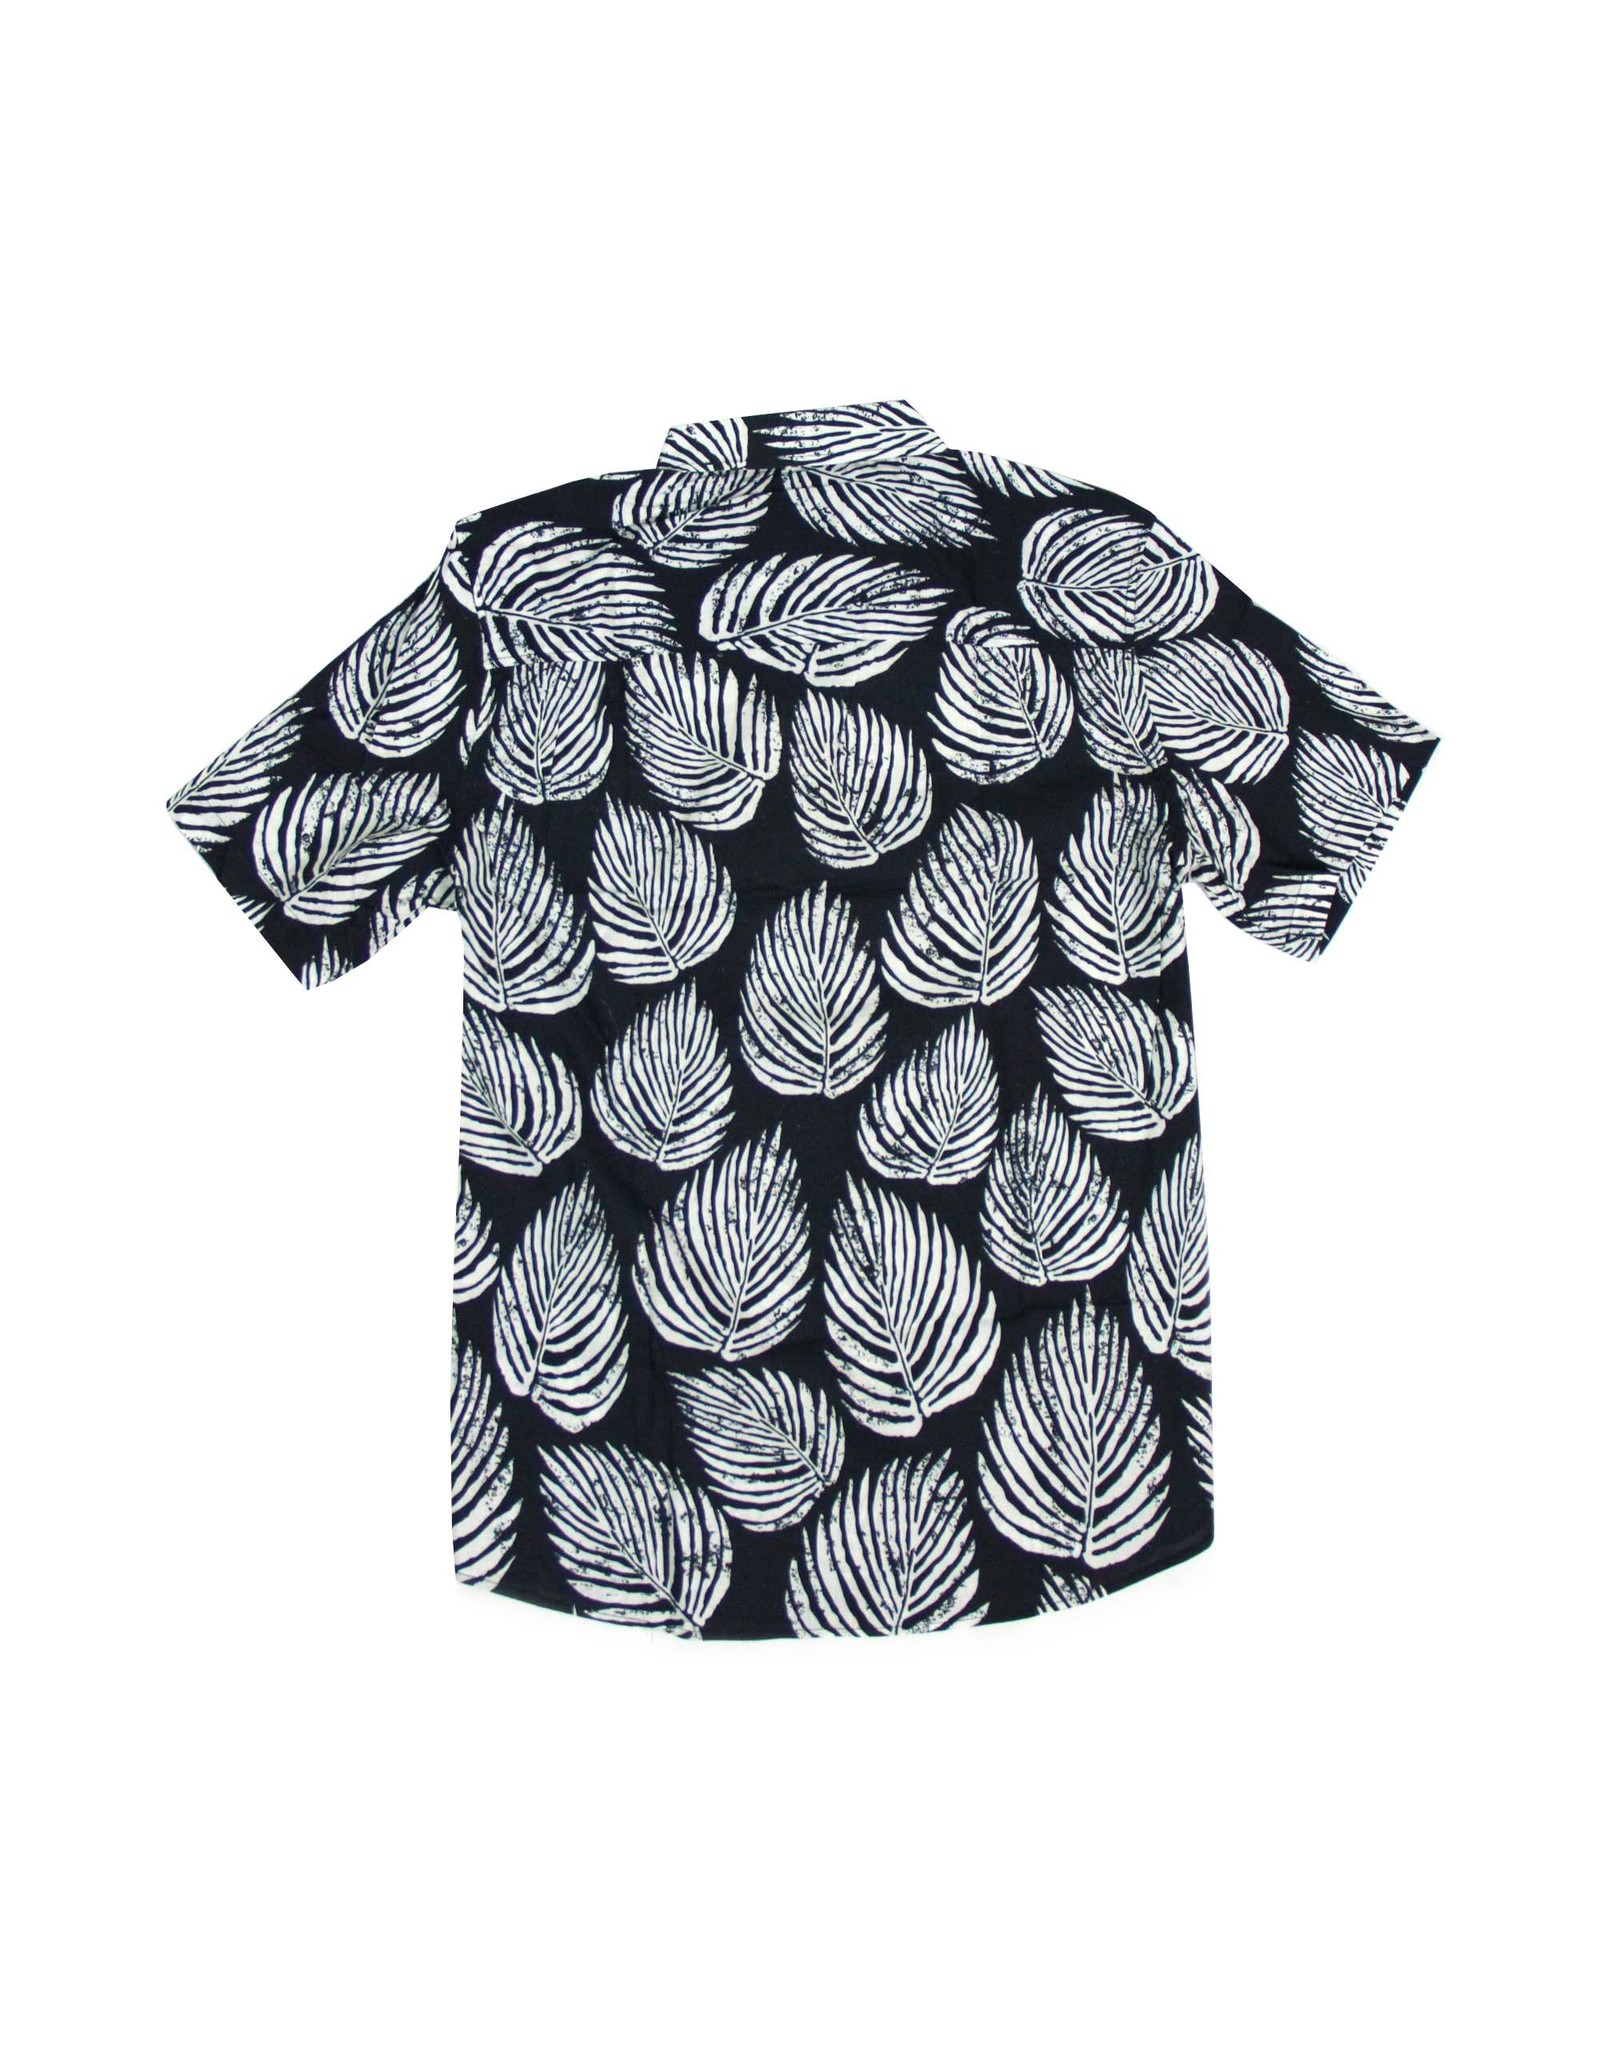 IslandHaze Pressed Pine Button-Up Shirt